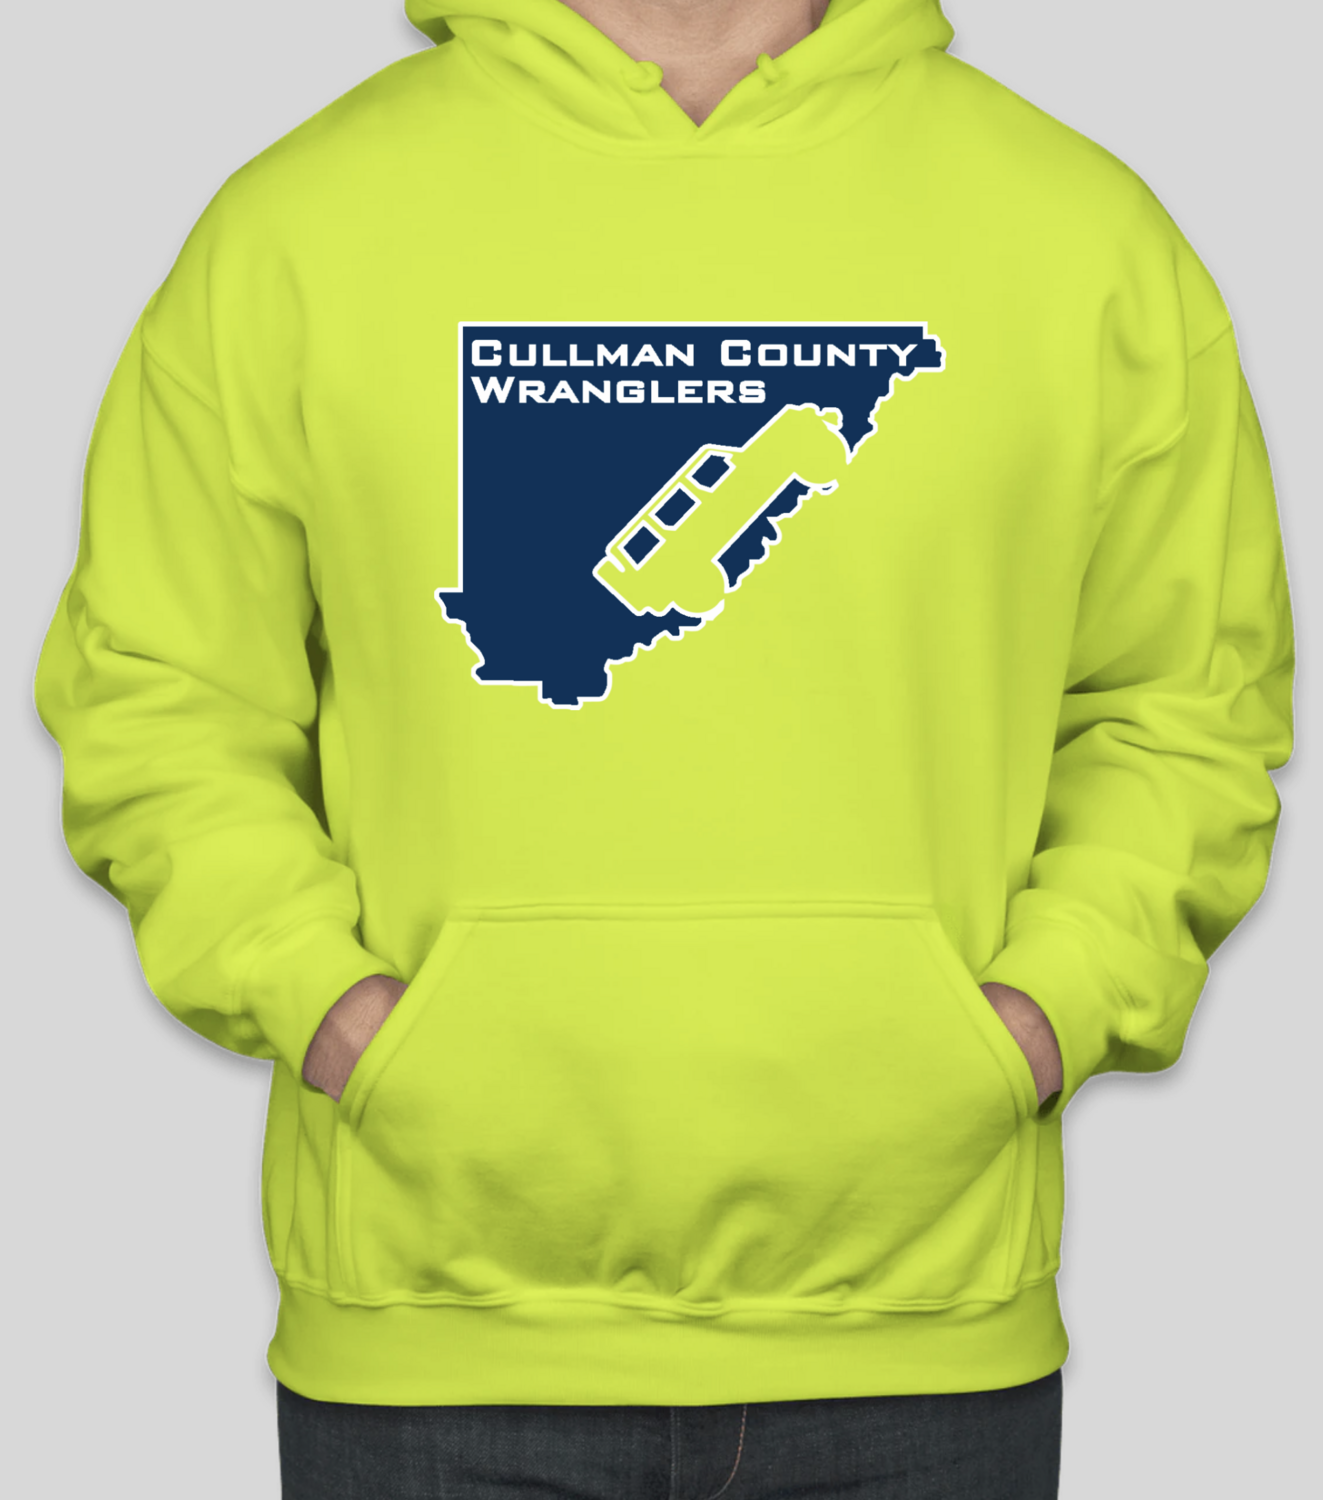 Cullman County Wranglers Hooded Sweatshirt - Safety Green